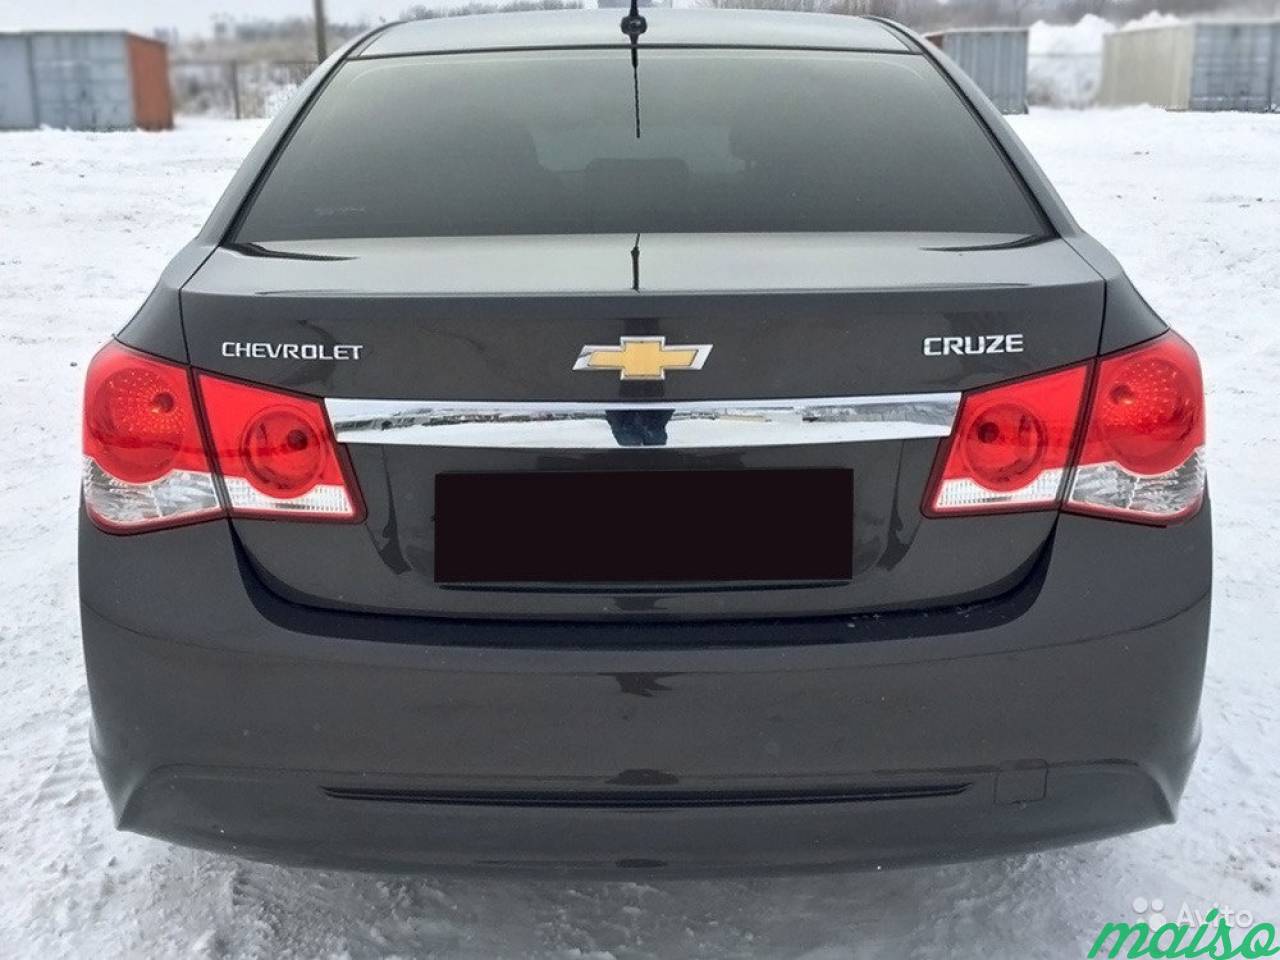 Chevrolet Cruze 1.8 AT, 2013, седан в Санкт-Петербурге. Фото 2